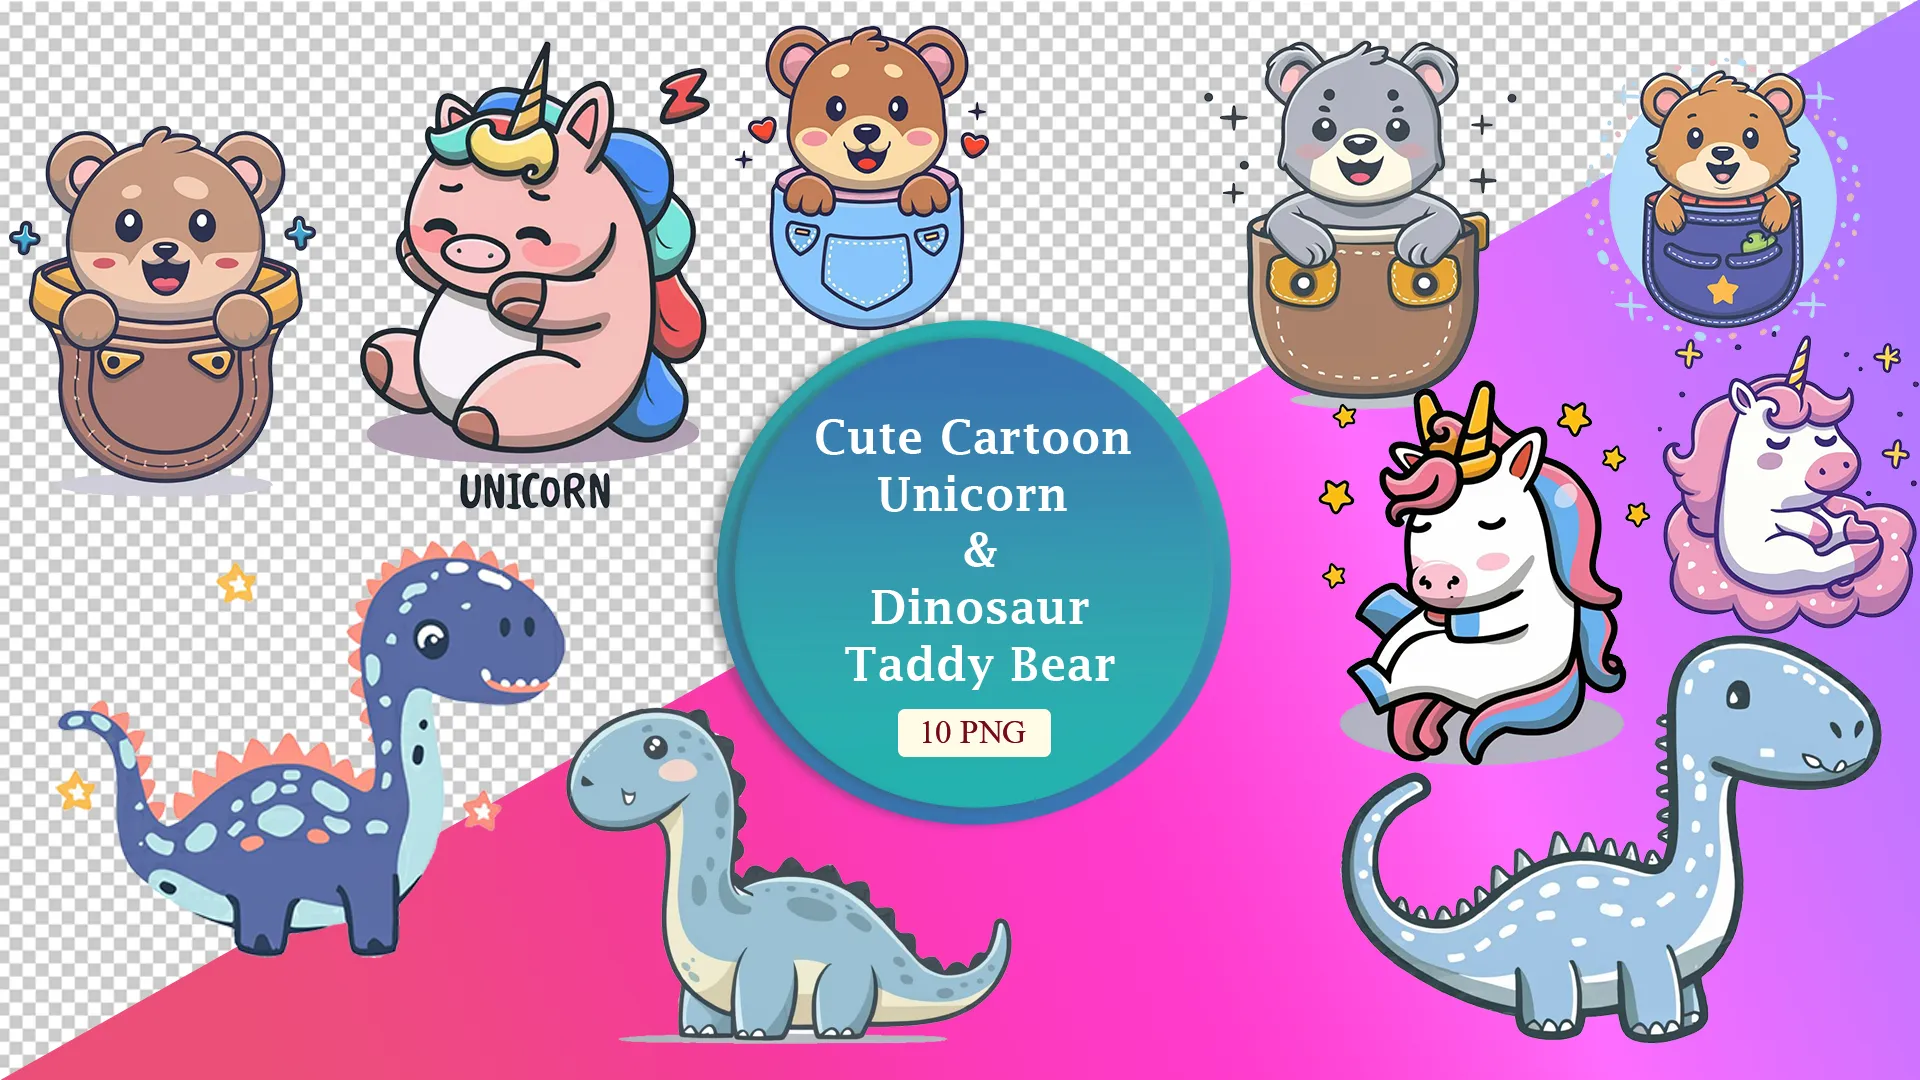 Unicorn and Dinosaur Cartoon Set for Children's Design Pack